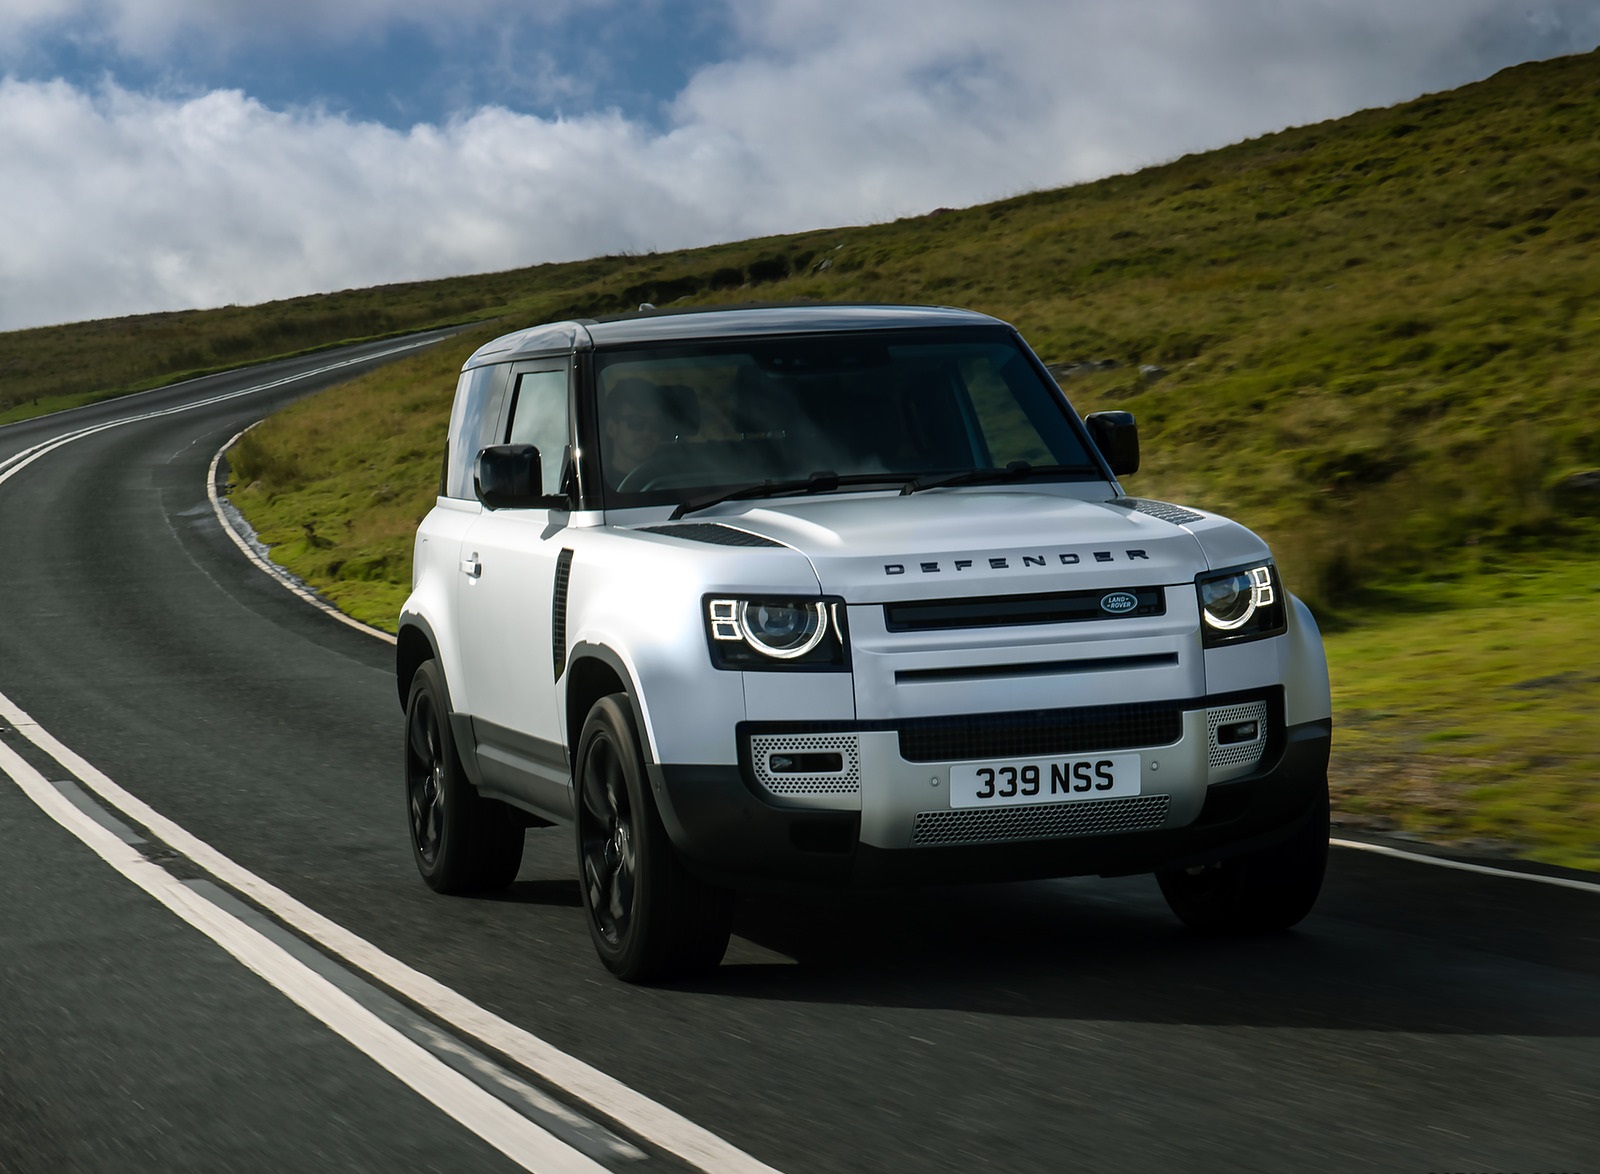 In pics: Land Rover Range Rover Sport luxury SUV | HT Auto